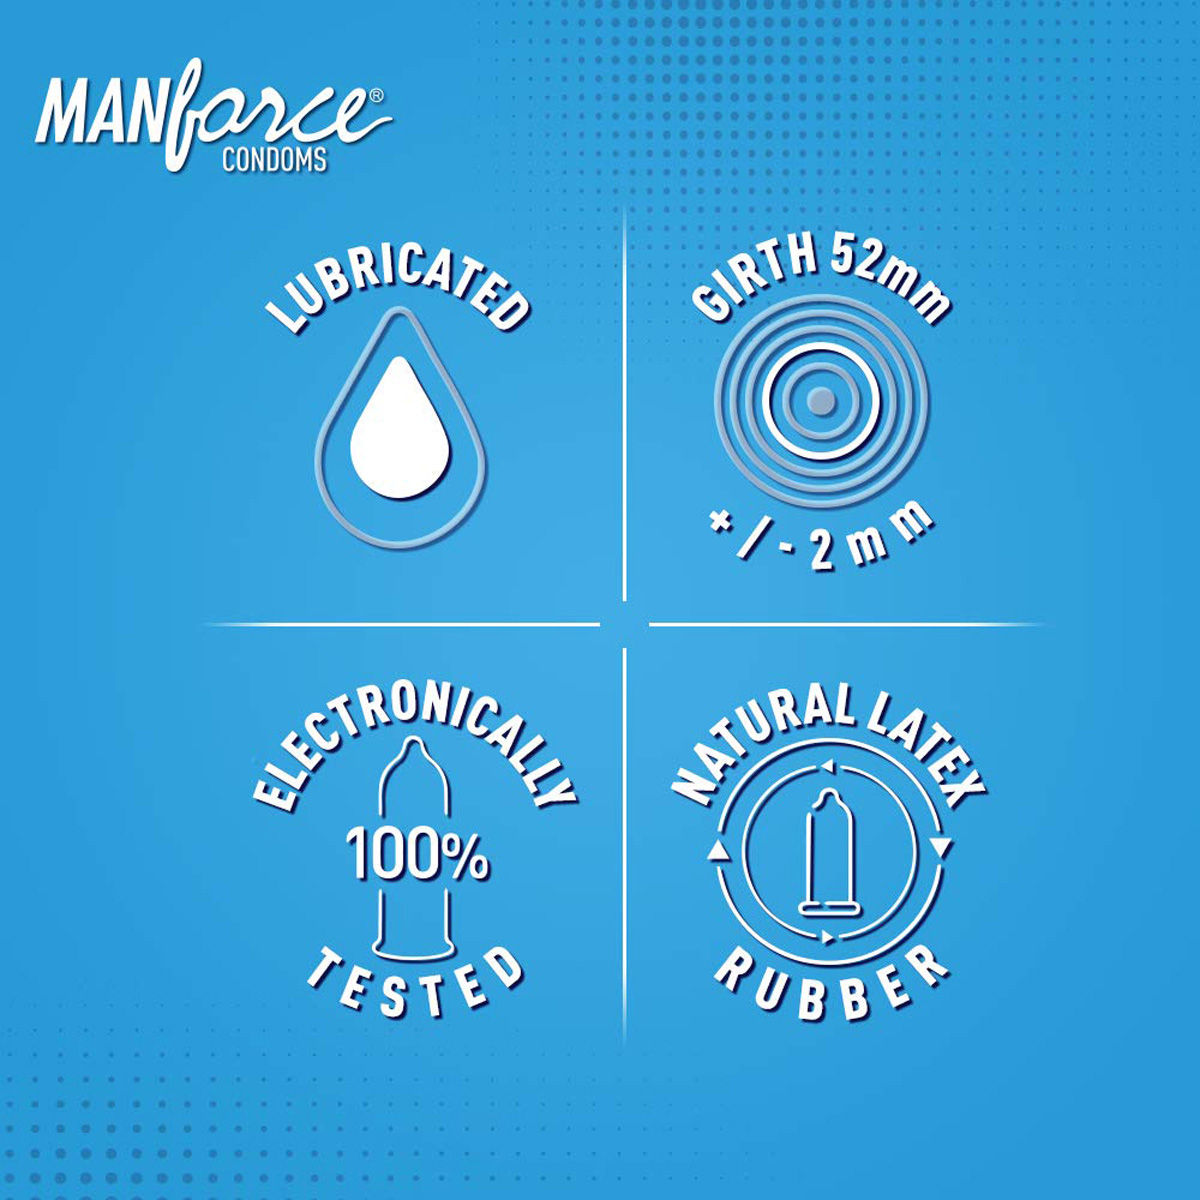 Letâ€™s #MakeItEpic, urges Manforceâ€™s new premium condom brand â€“ Epic